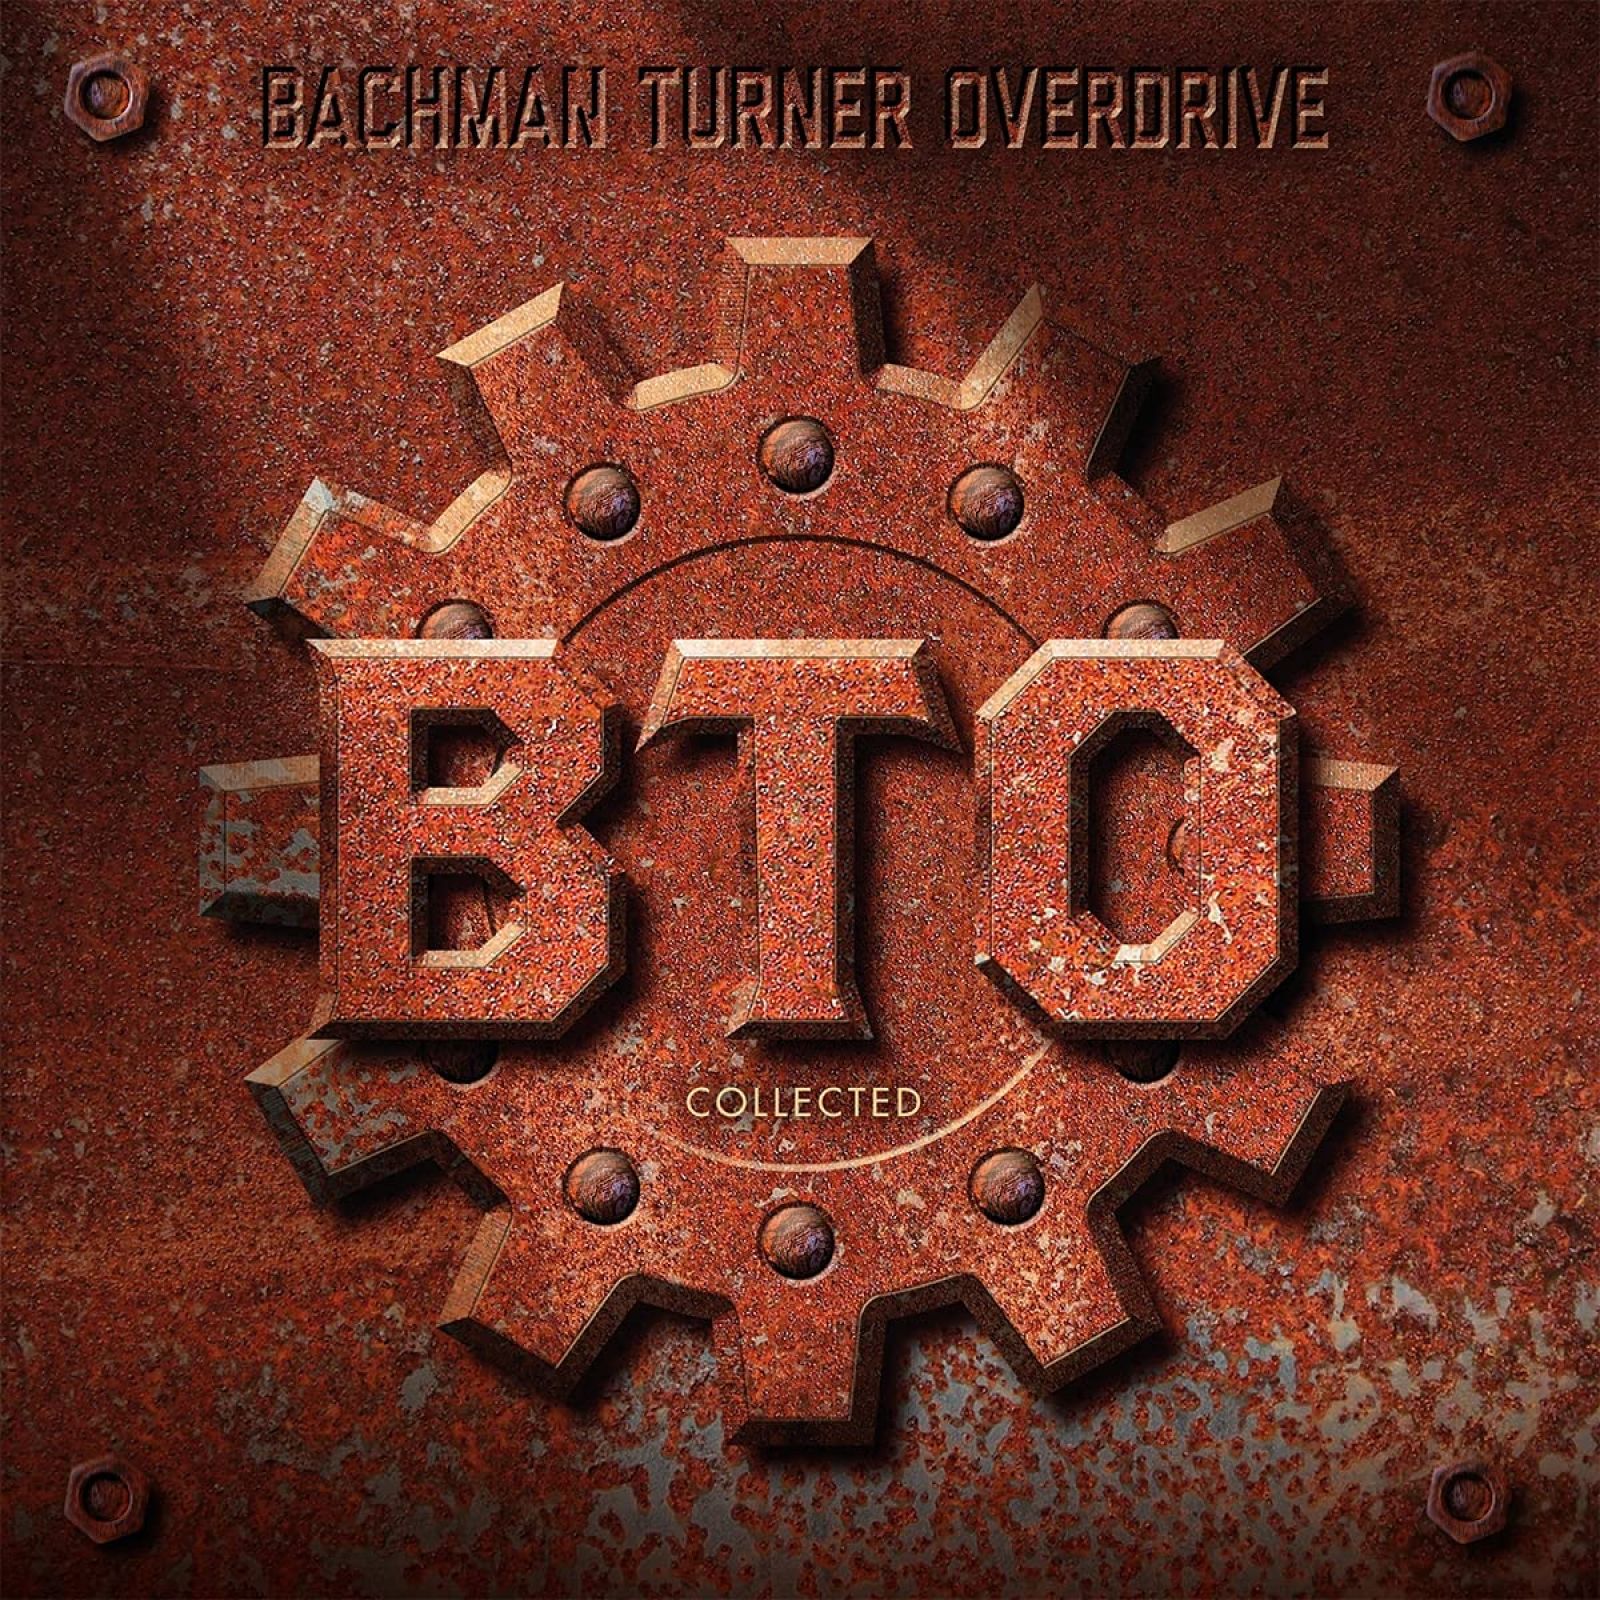 Виниловая пластинка Bachman Turner Overdrive, Collected: Greatest Songs (0600753911327) старый винил mercury bachman turner overdrive bachman turner overdrive ii lp used